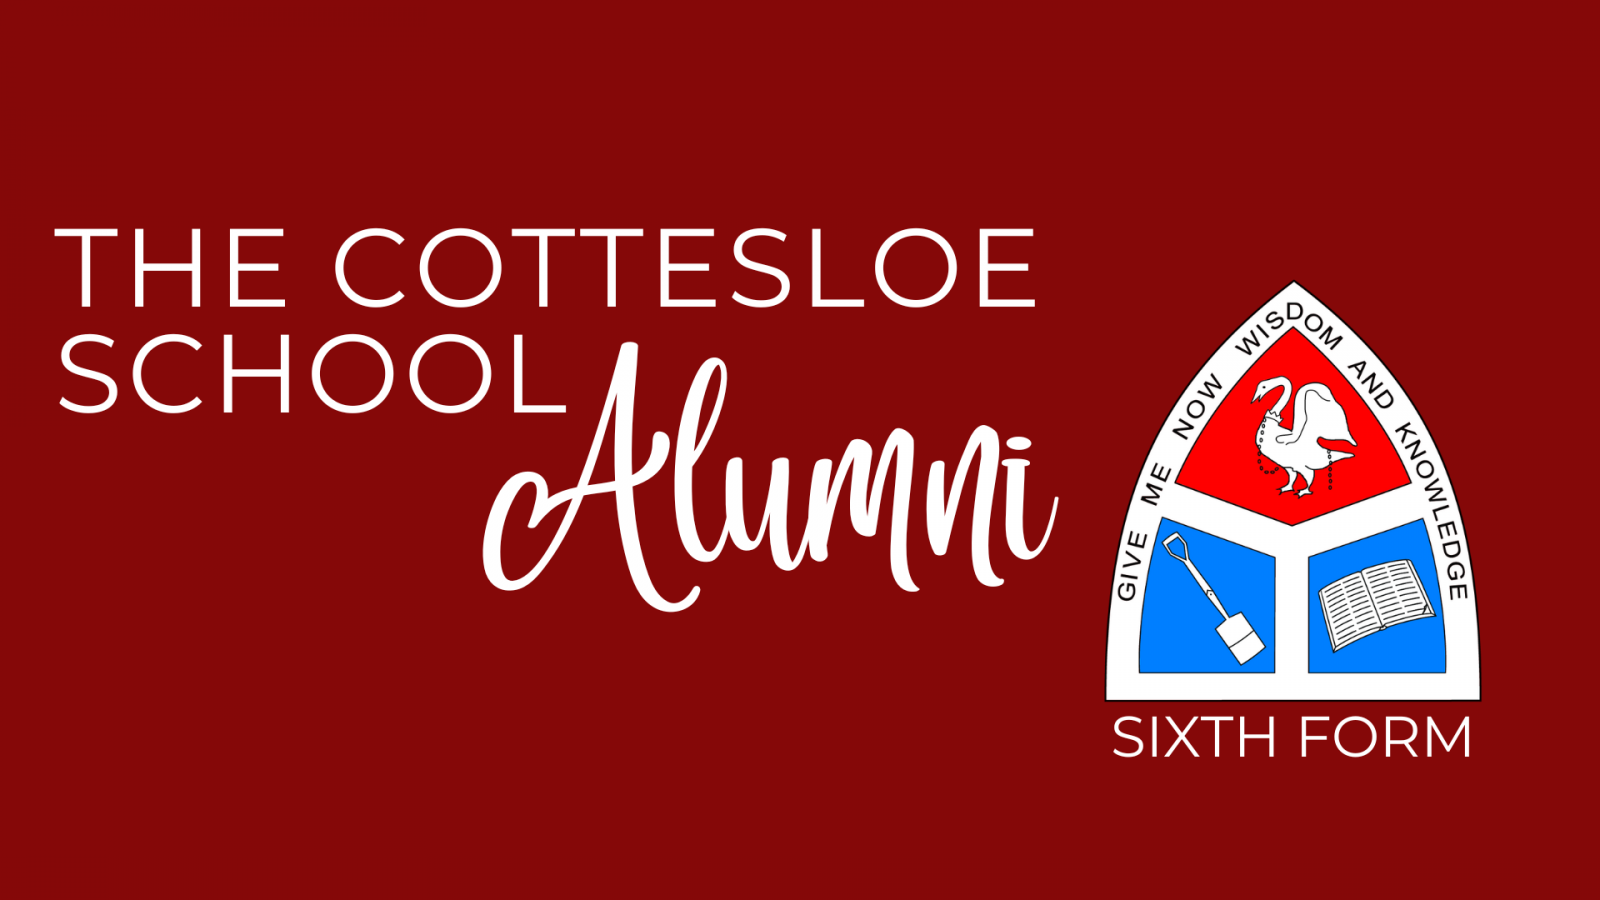 The Cottesloe School Alumni